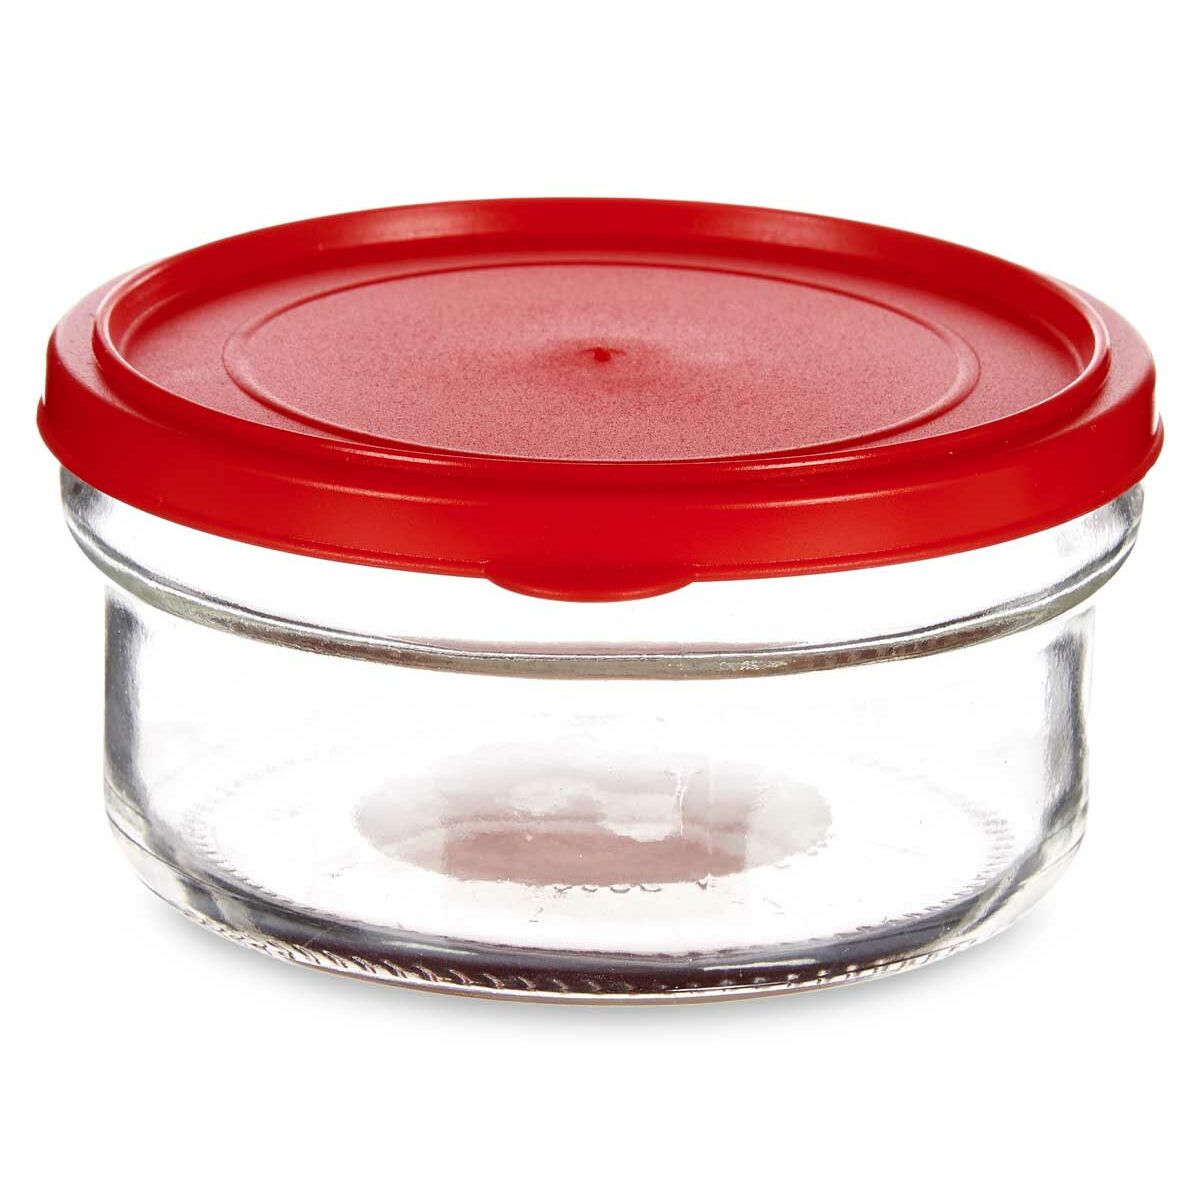 Rund matlåda med lock Röd Plast 415 ml 12 x 6 x 12 cm (24 antal)